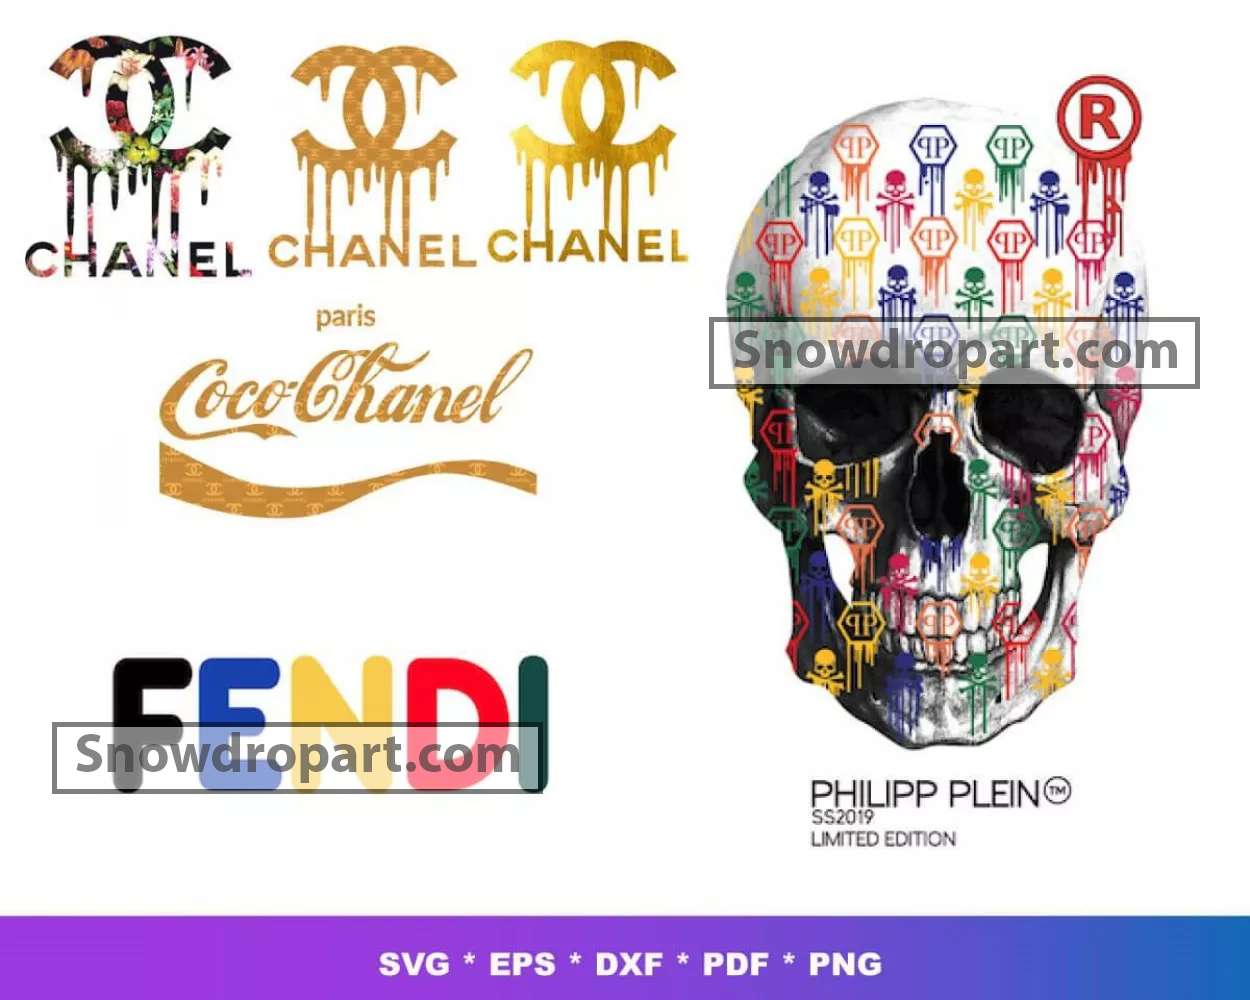 Fendi Svg Bundle, UPP559  Fashion branding, Fendi, Fashion brand